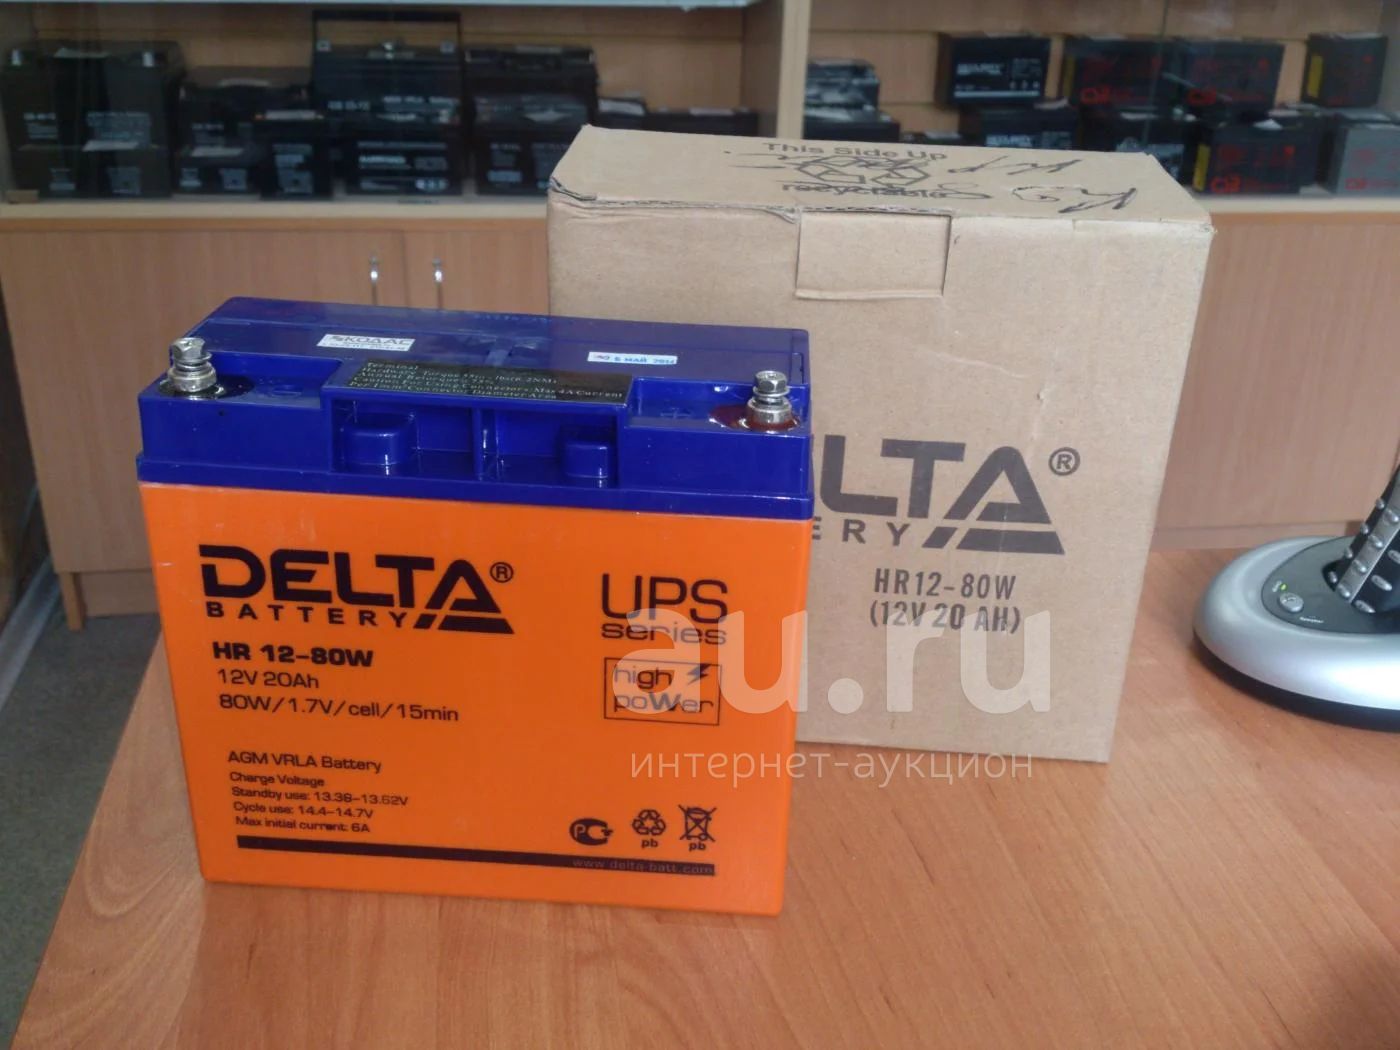 Аккумулятор 20hr. Delta HR 12-80w (12в/20 а·ч). Аккумуляторная батарея Delta HR 12-80w. Delta hr12-80w 20а/ч. Аккумуляторная батарея Delta HR 12-80w (12v / 20ah).